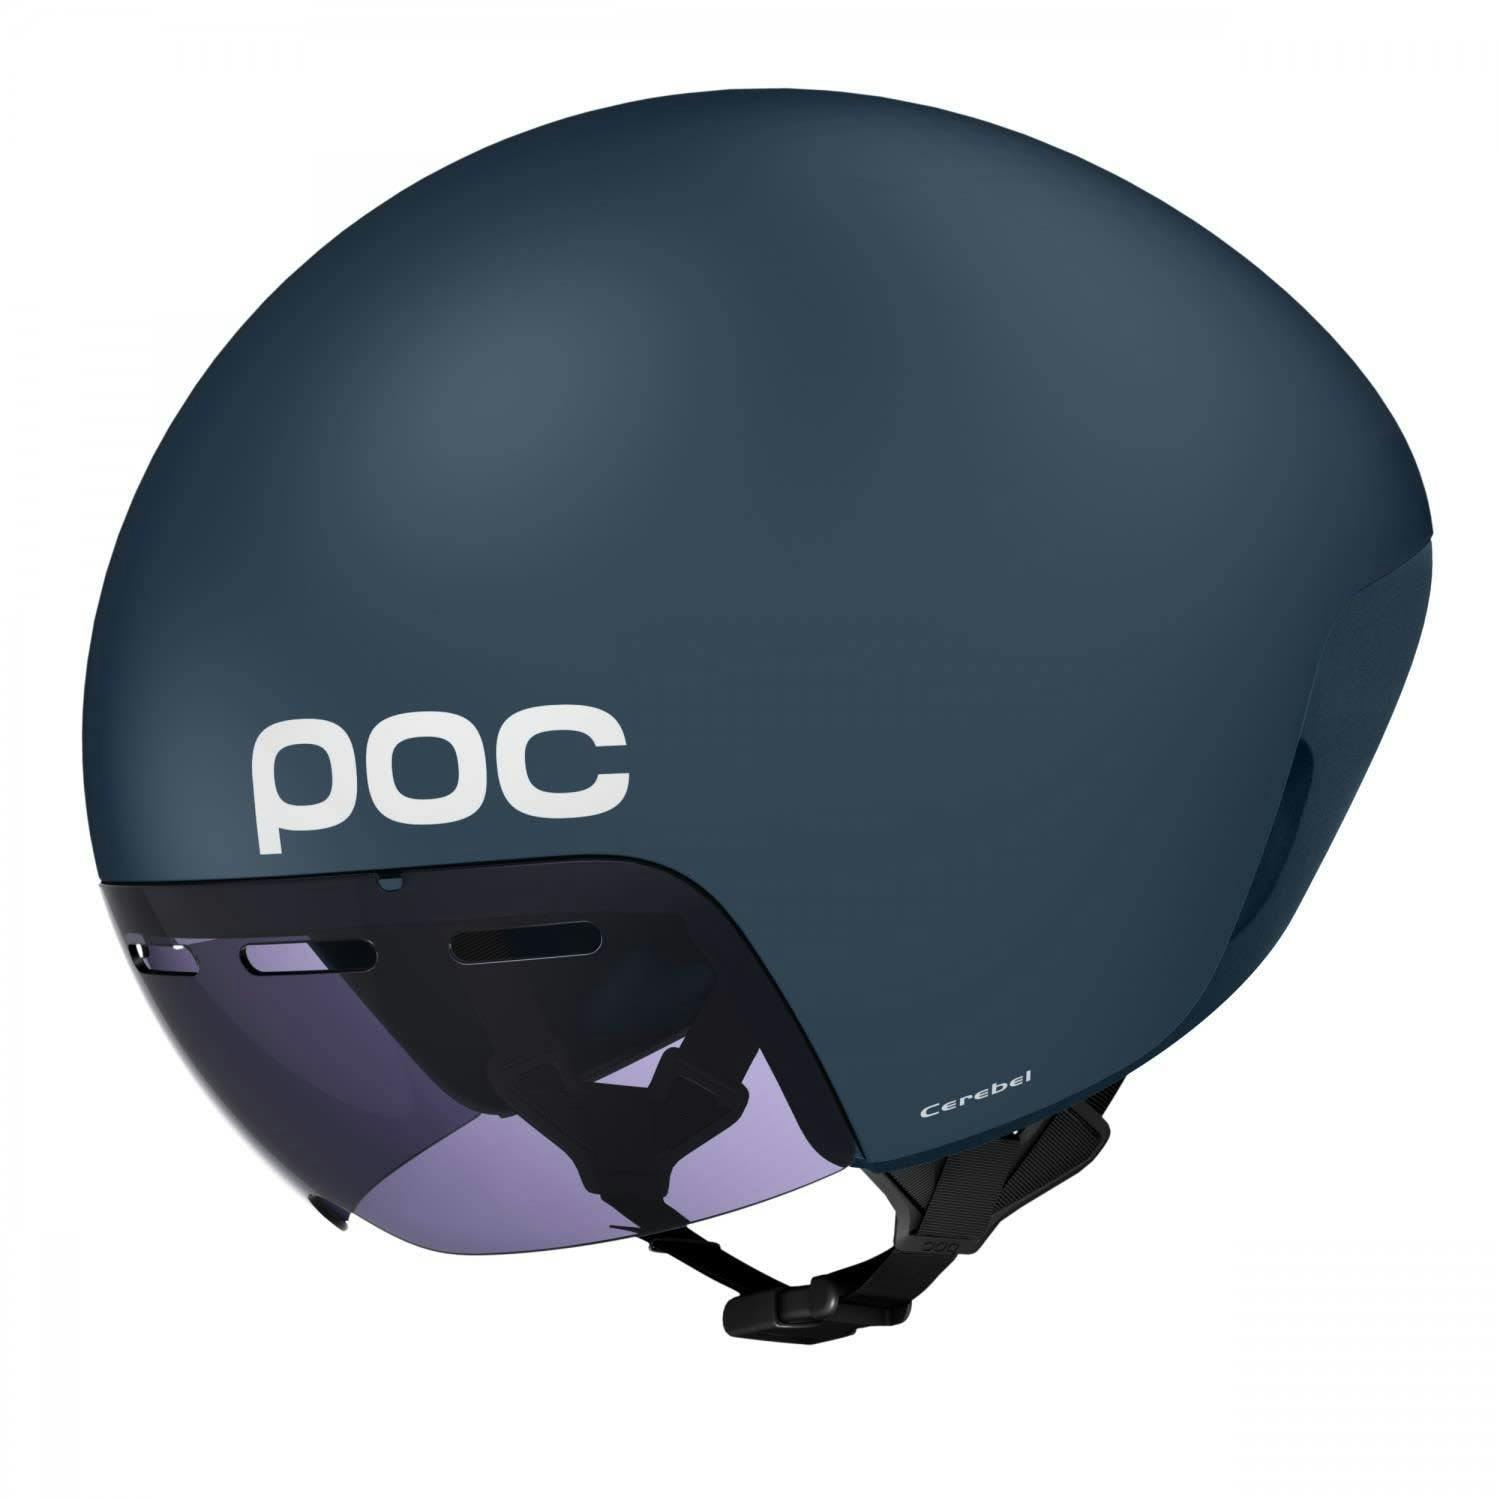 A blue aerodynamic time trial cycling helmet